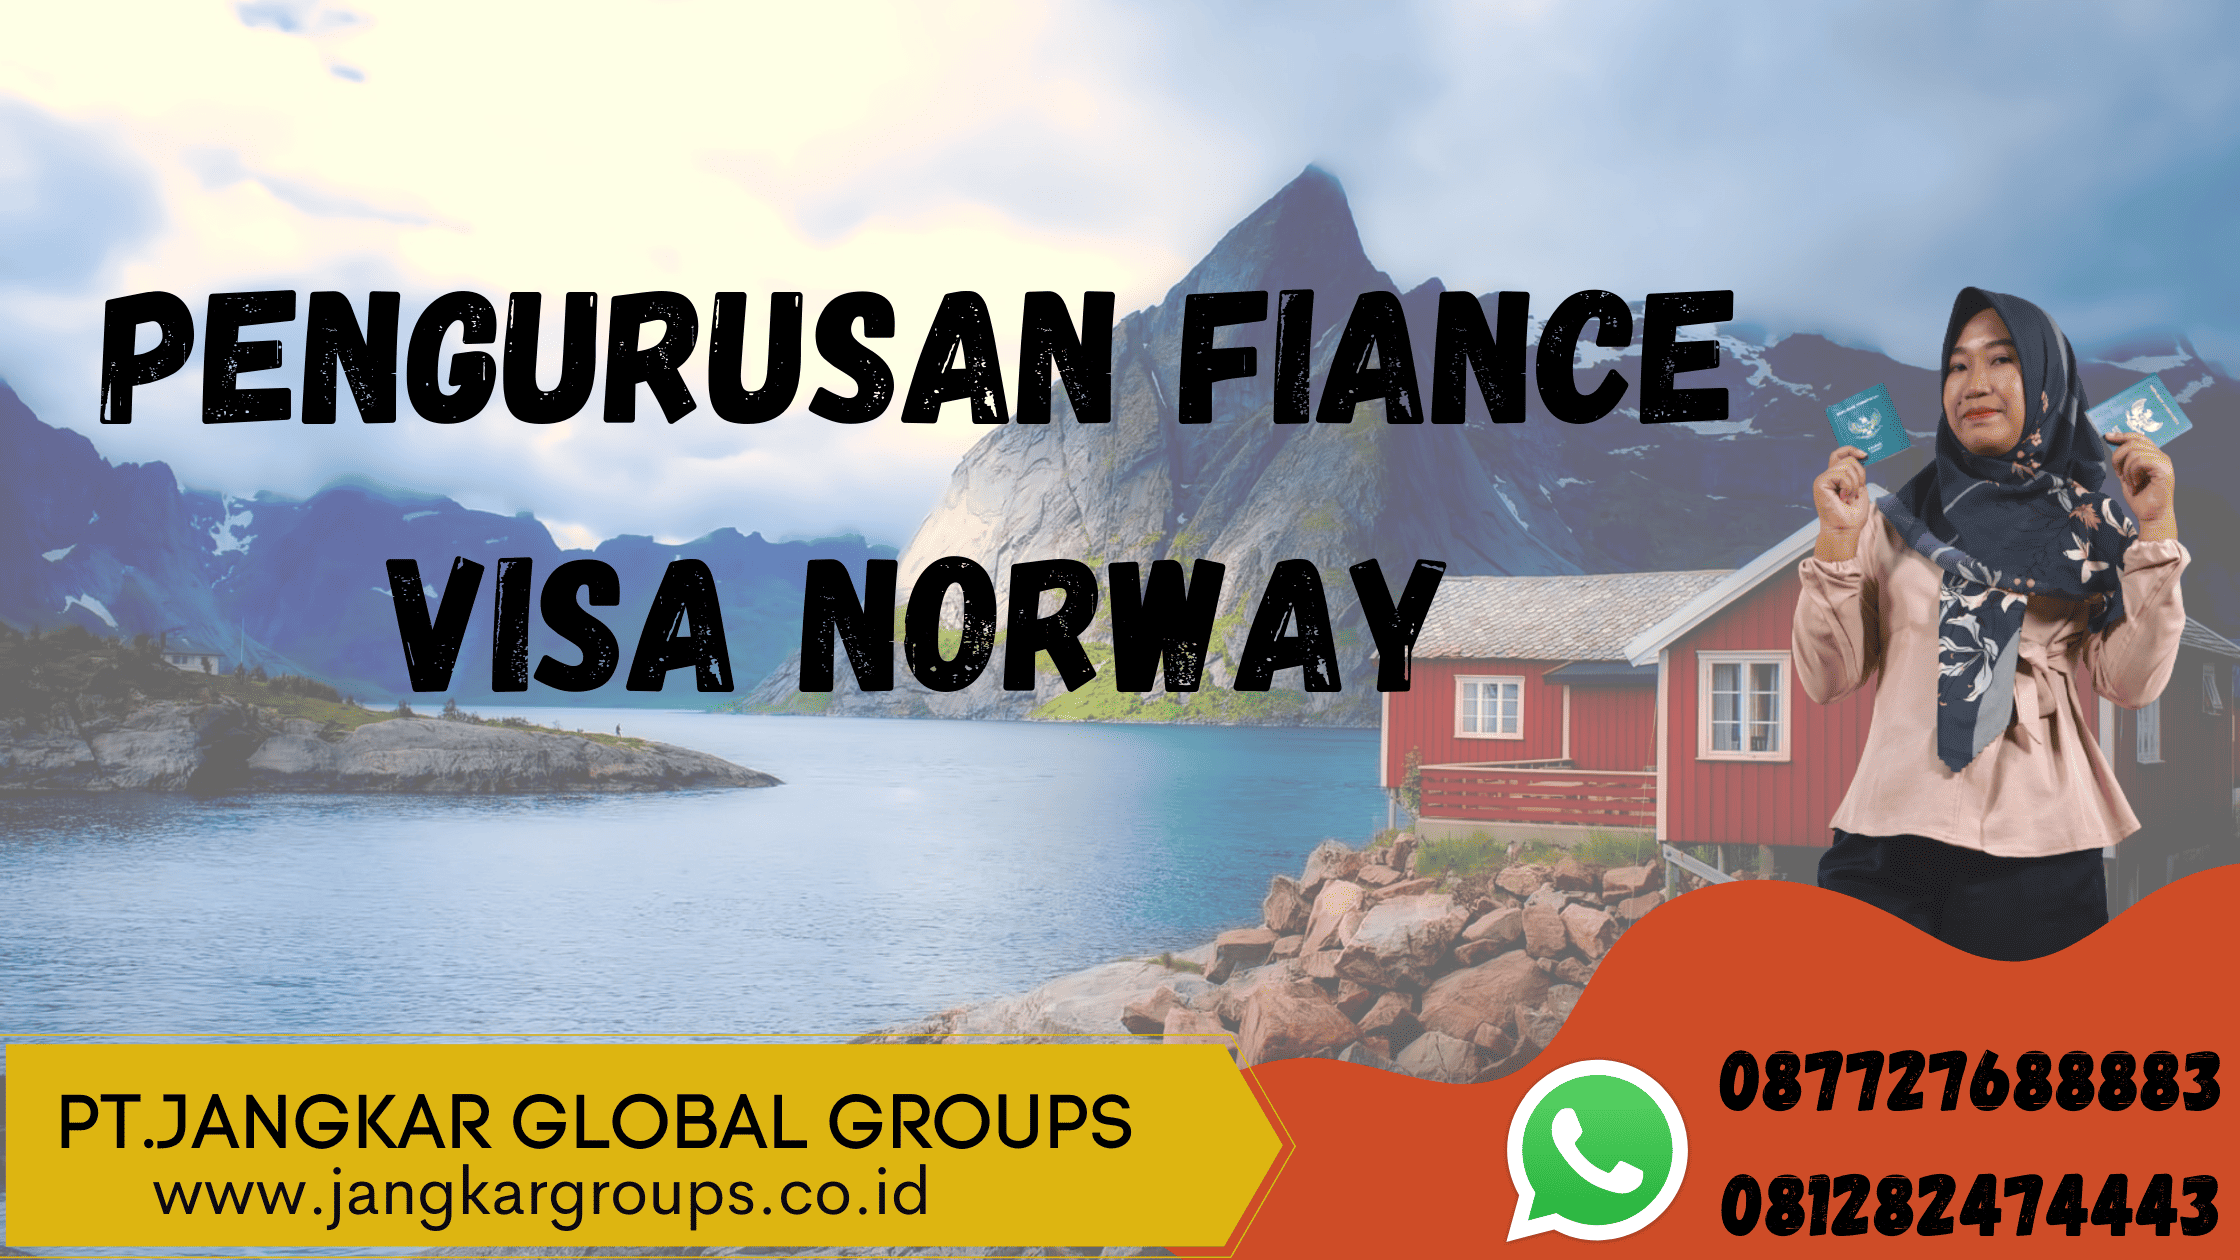 Pengurusan Fiance Visa Norway